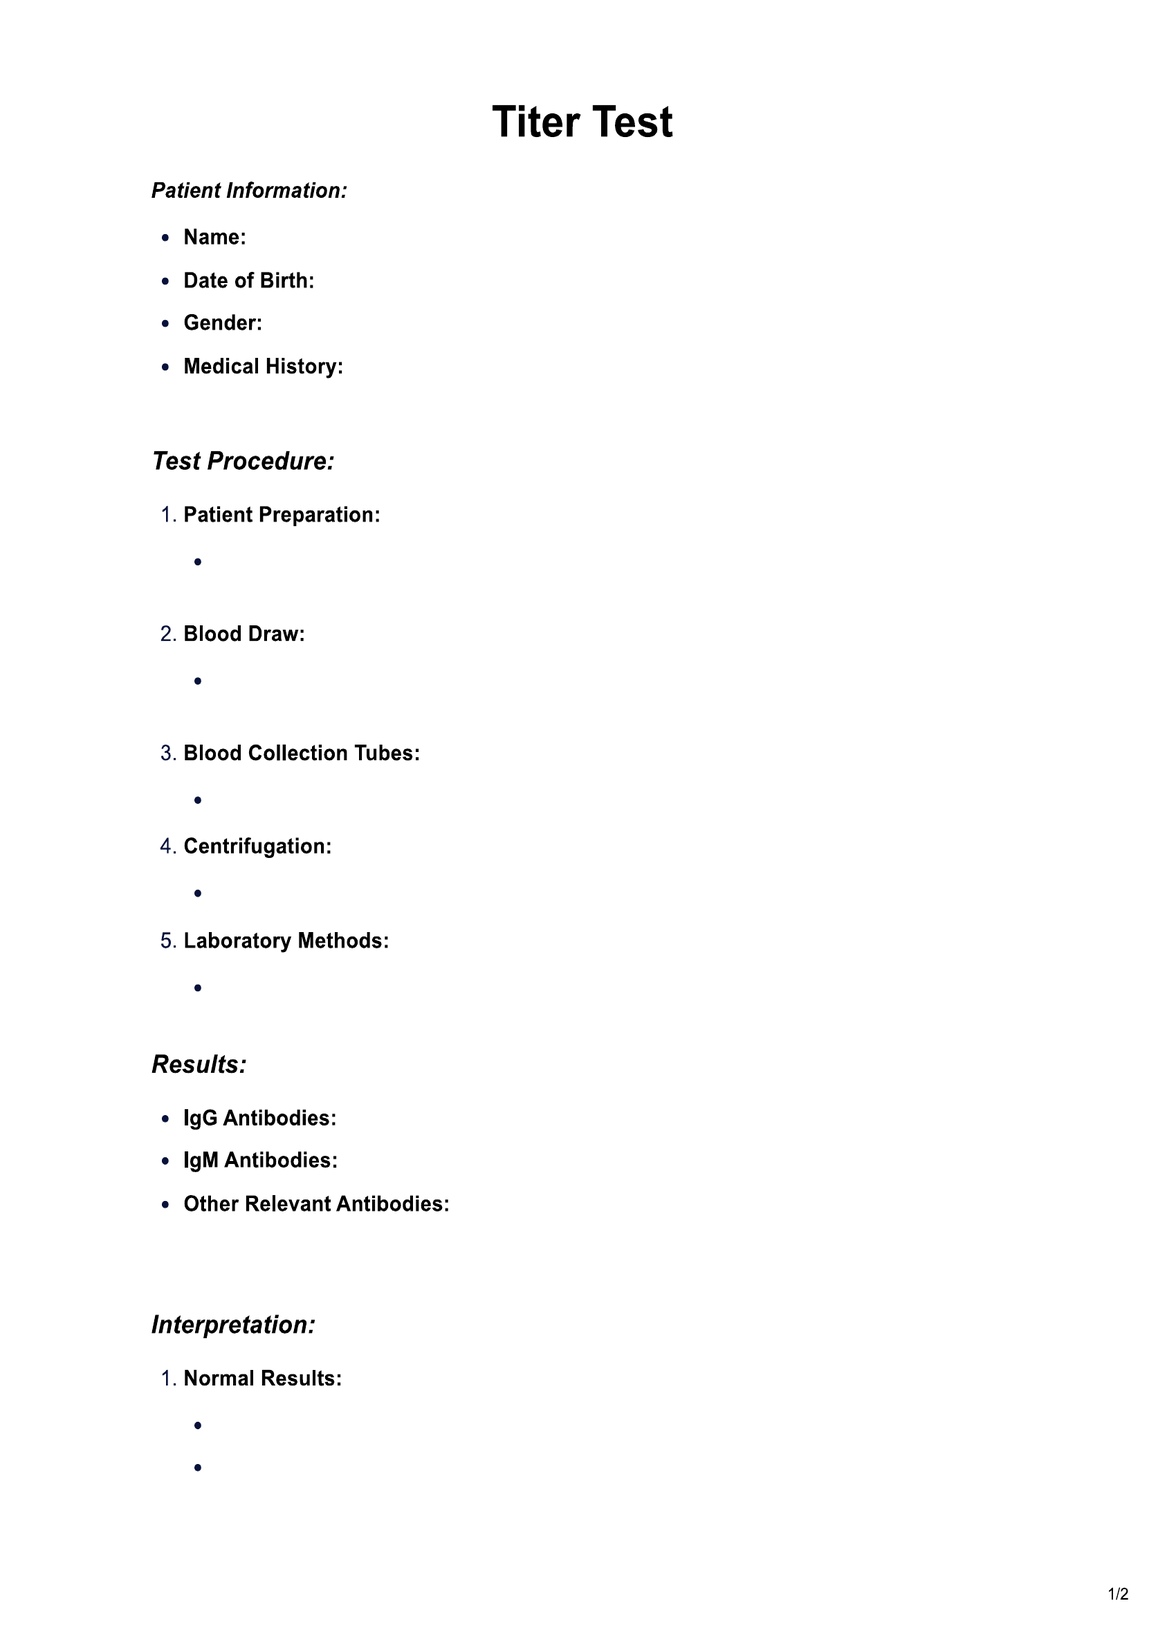 Titer Test PDF Example